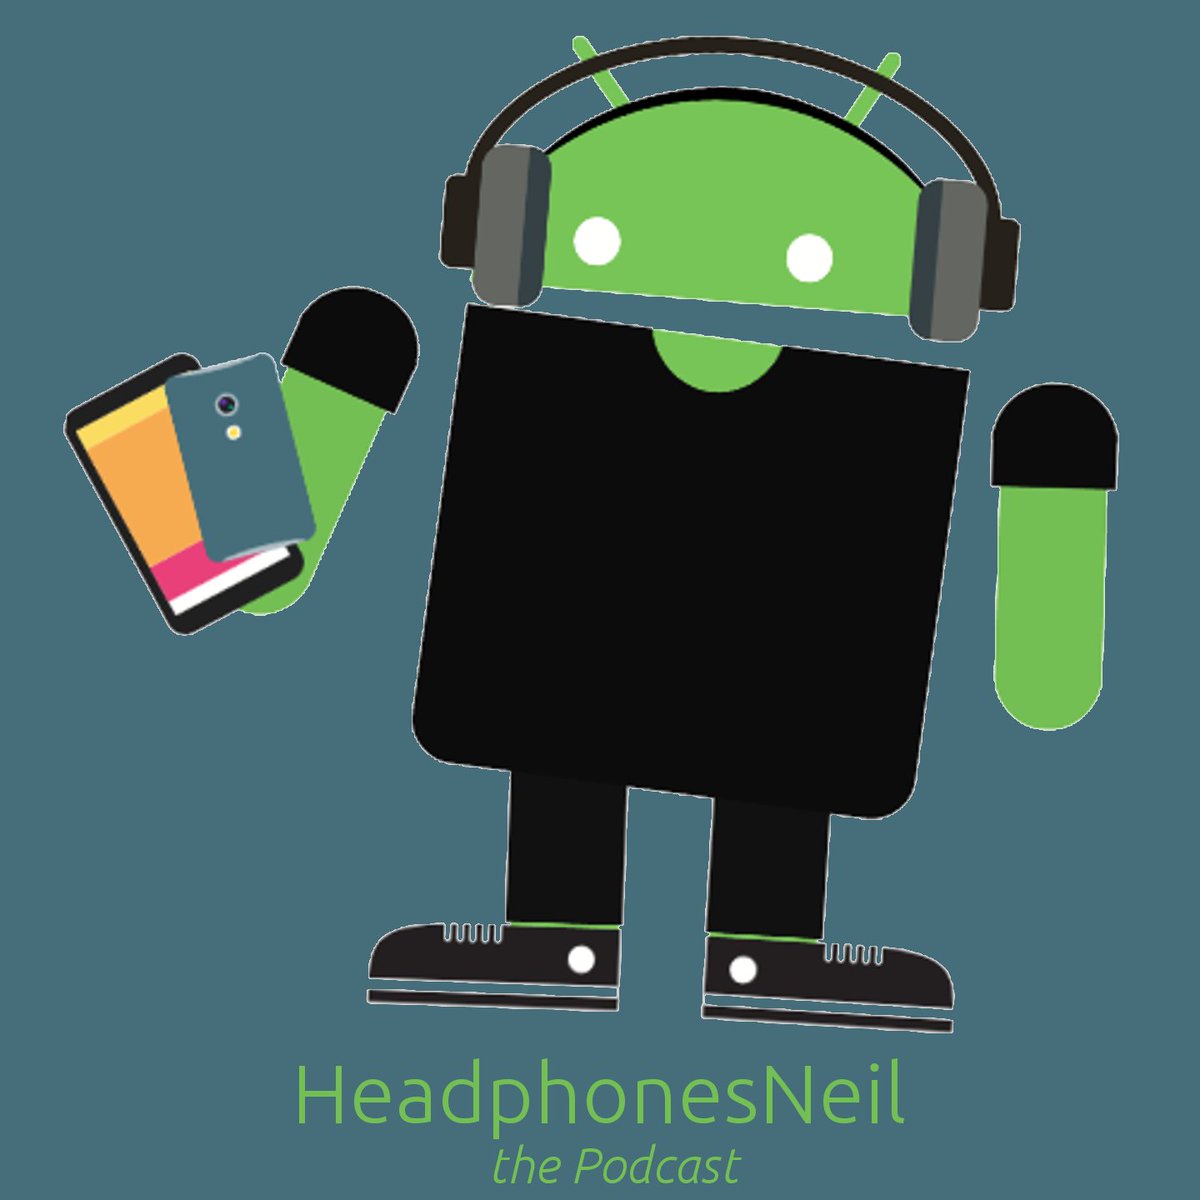 HeadphonesNeil The Podcast
Annoucement

pateln01.com/2018/08/headph…

#podcast #android #starwars #movie #tv #review #patreon #headphonesneil #pateln01 #episodeguide #annoucement #patron